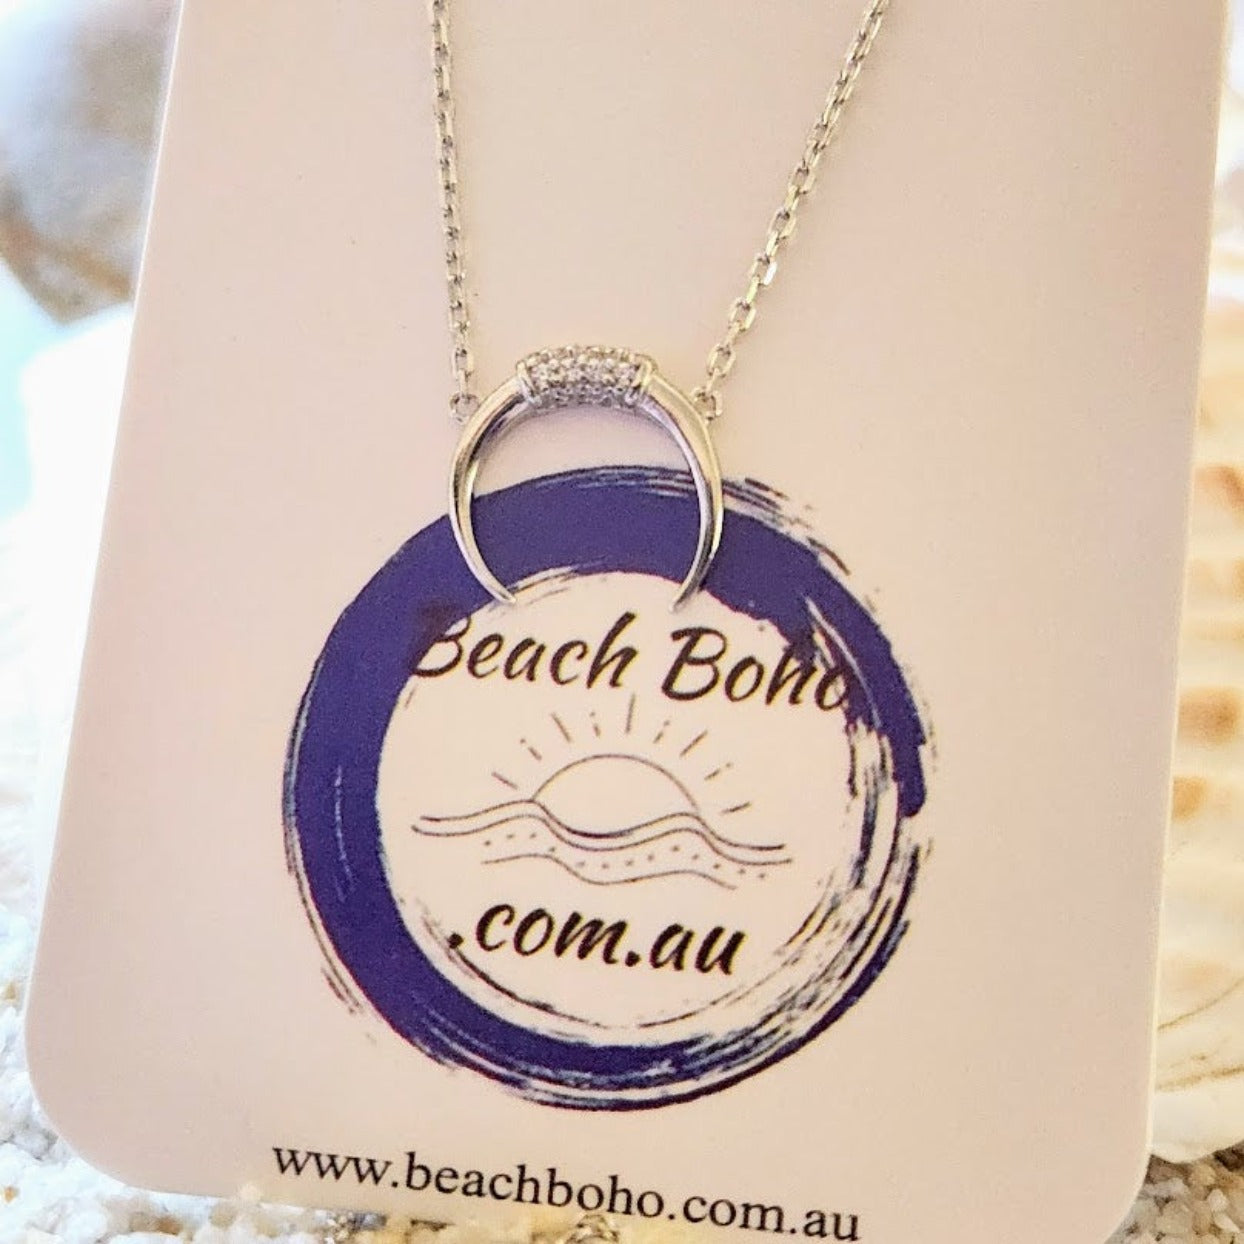 CRESCENT MOON & STARS - 925 NECKLACE - Premium necklaces from www.beachboho.com.au - Just $65! Shop now at www.beachboho.com.au